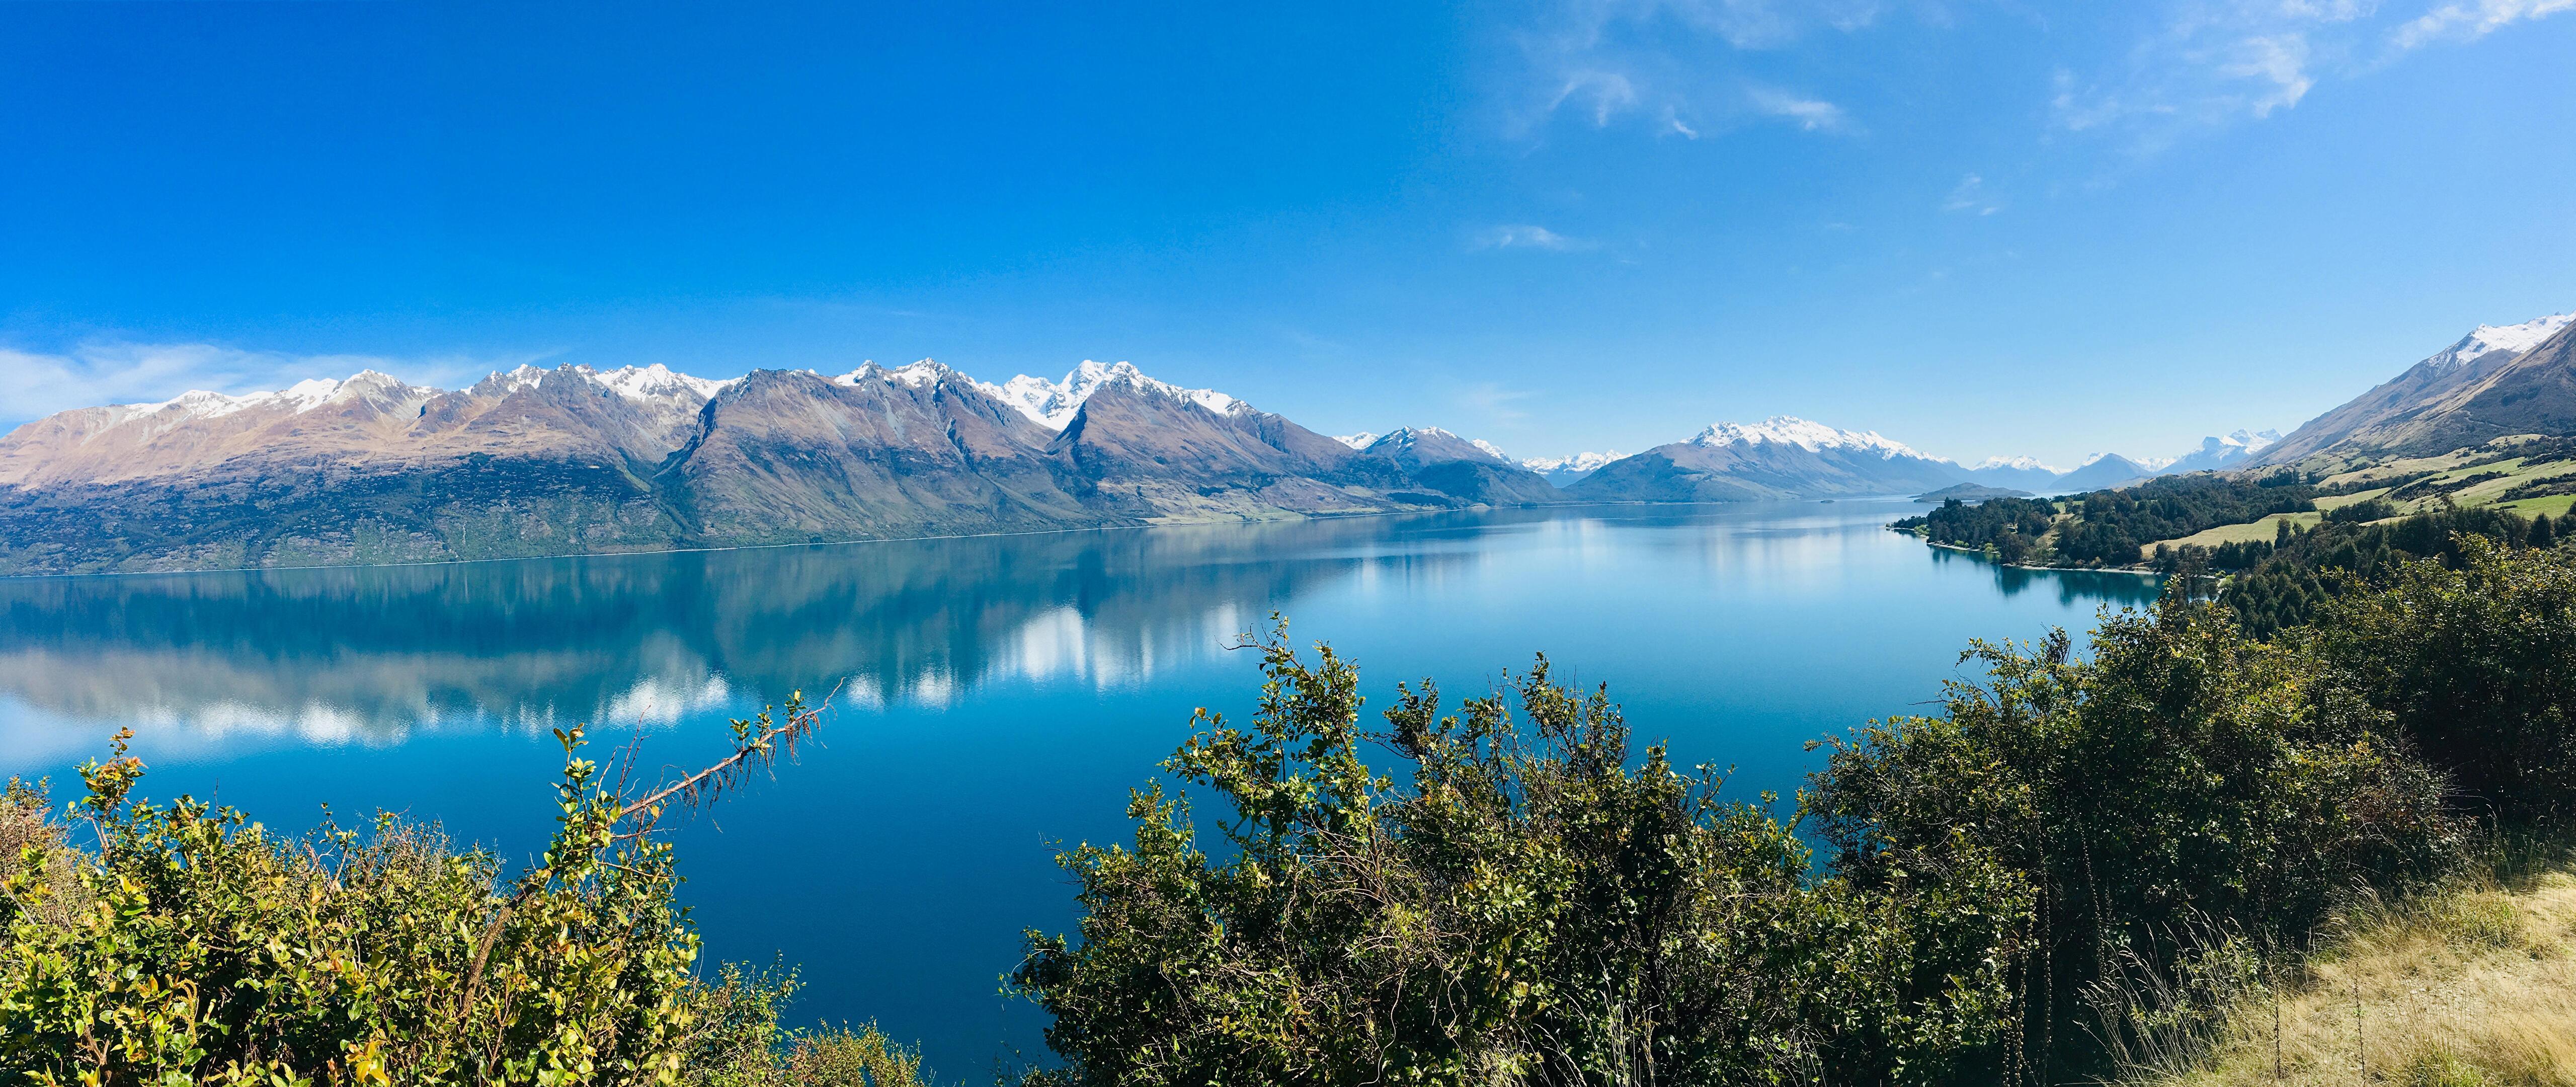 Новая зеландия 4. Озеро Руатанивха новая Зеландия. Озеро тамо новая Зеландия. Озеро Вакатипу. Озеро Виктория новая Зеландия.